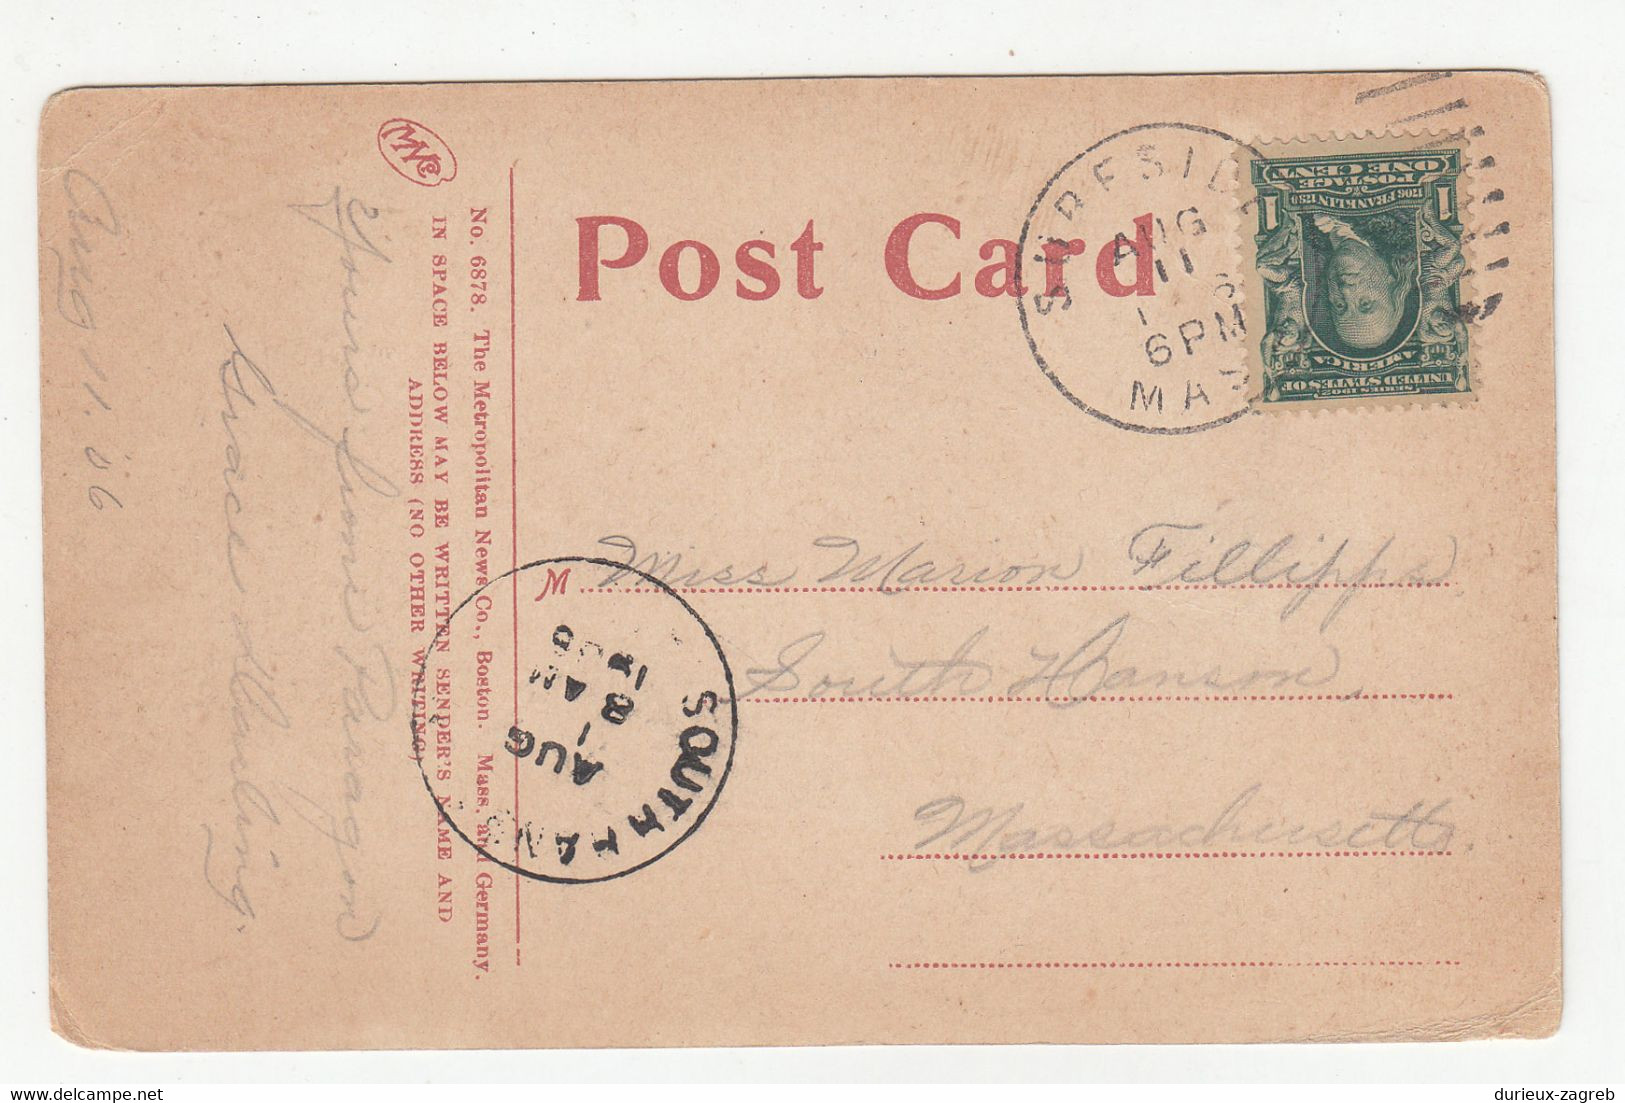 "Johnstown Flood" Paragon Park, Nantasket Beach, MA Old Postcard Posted 1906 Surfside To South Hanson B211001 - Nantucket